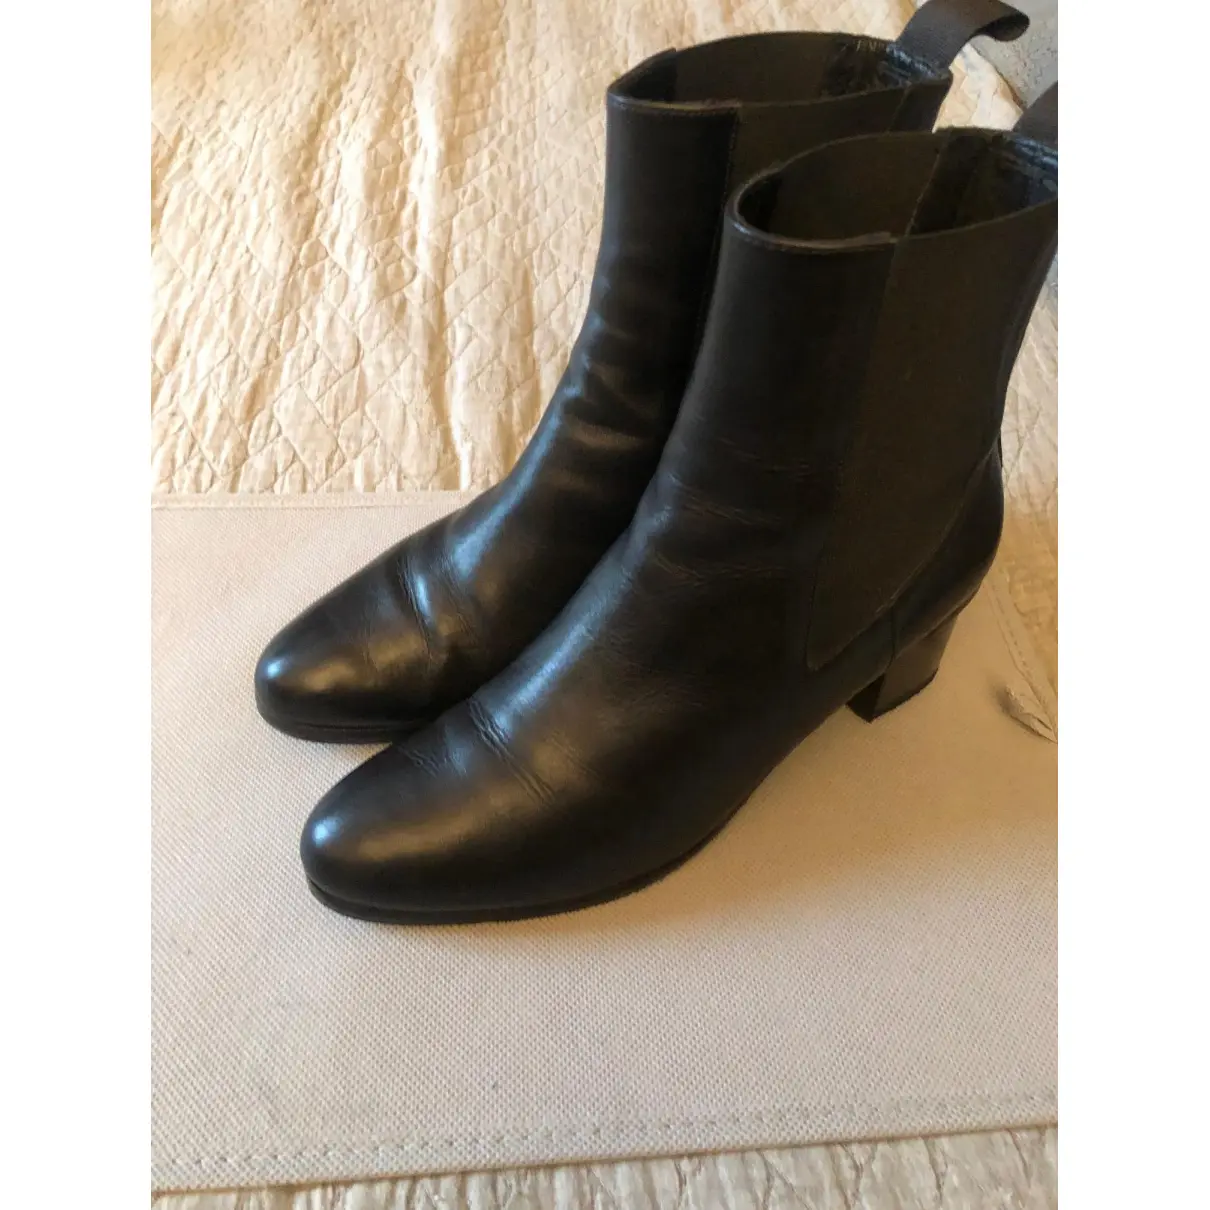 Buy Lk Bennett Leather ankle boots online